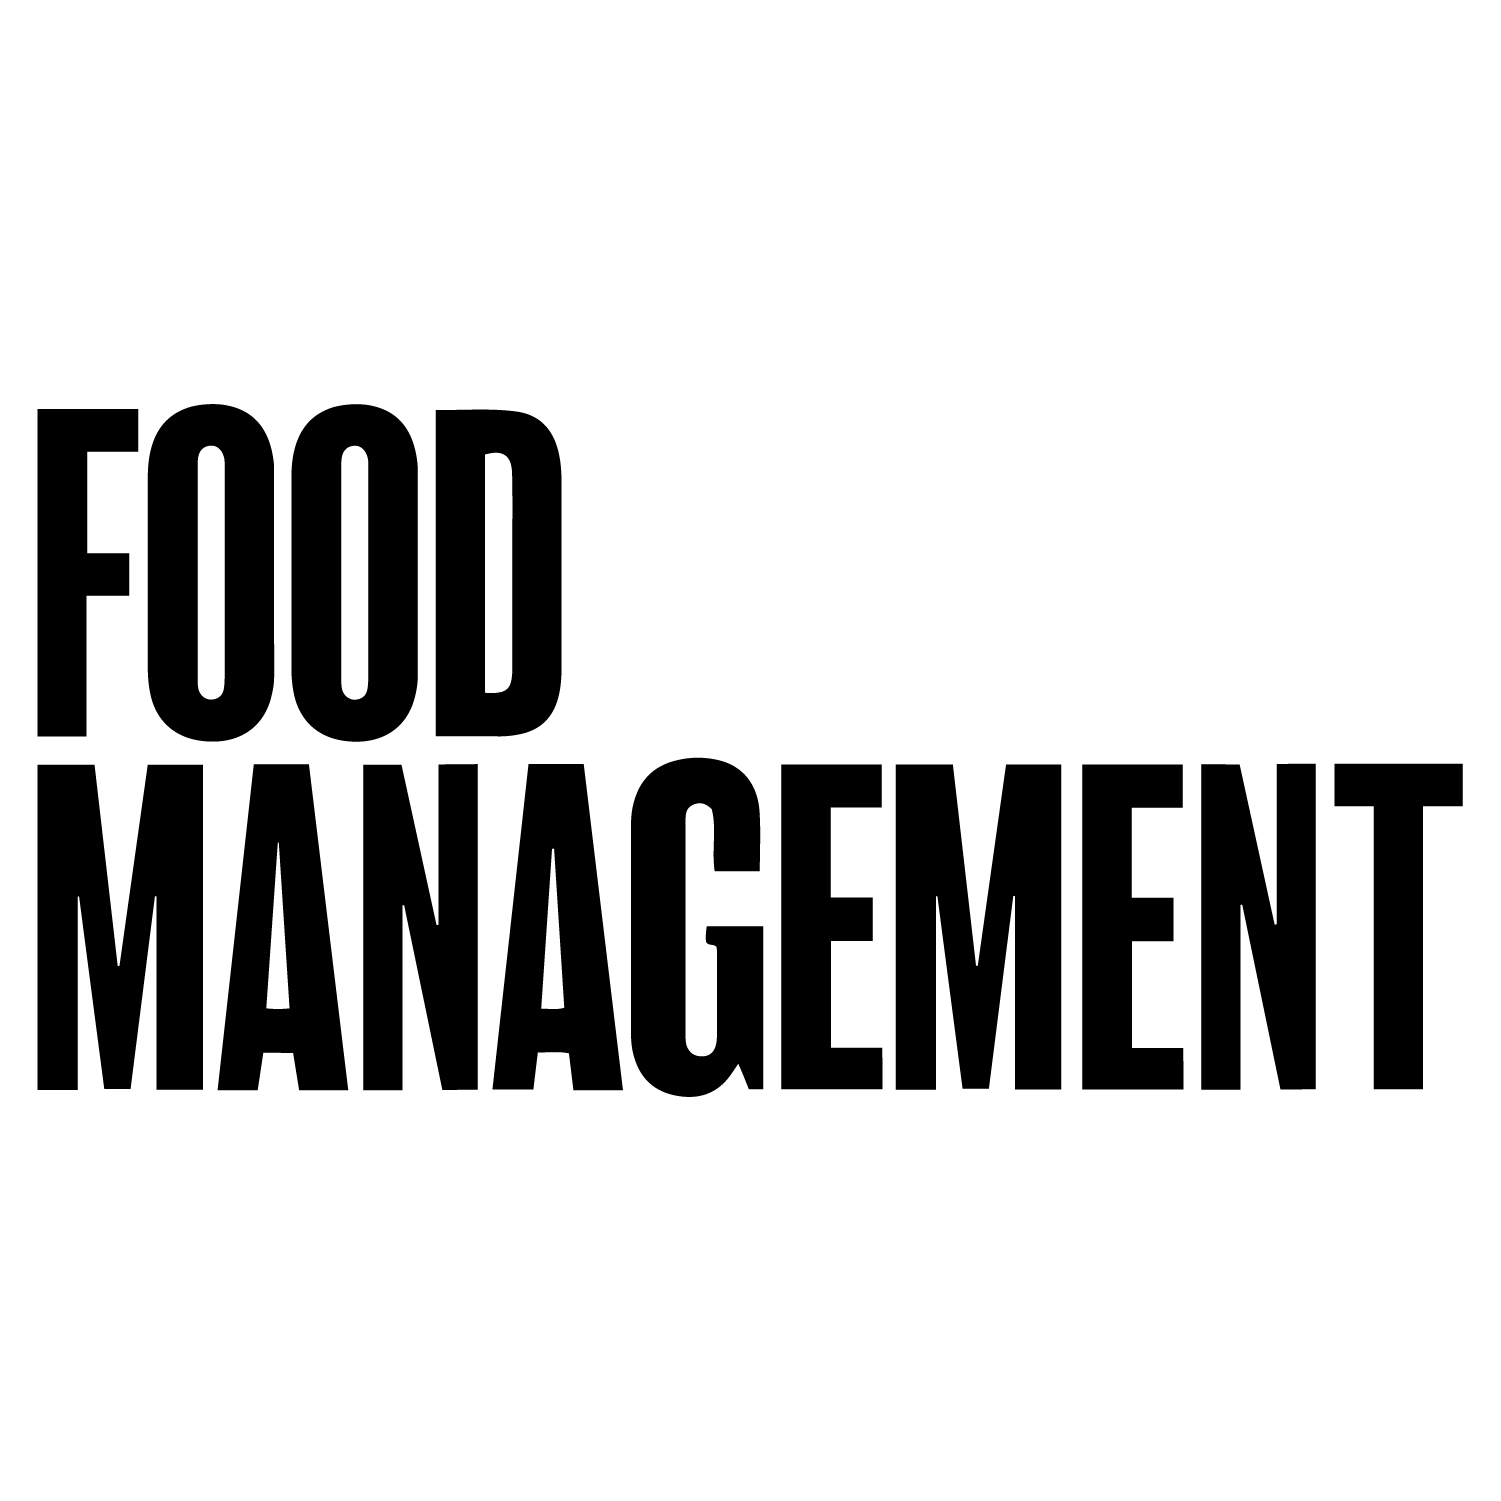 Food Management Logo